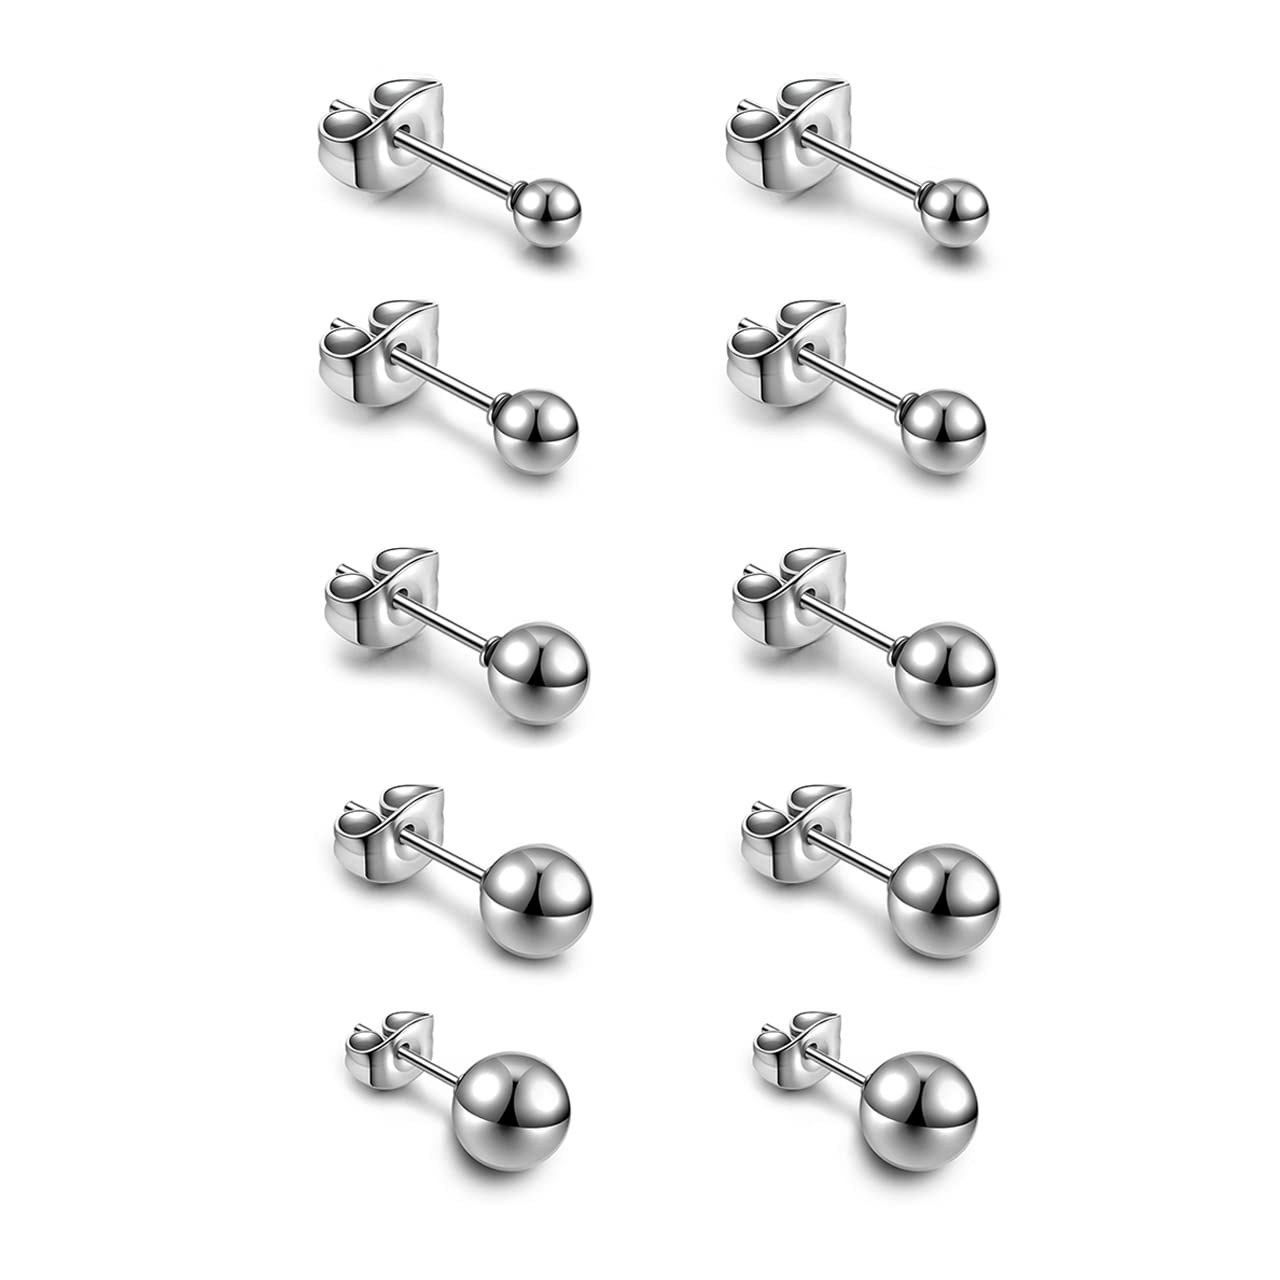 Jovivi Silver Black Stud Earrings for Women Men Tiny Ball Stud Earrings Round CZ Earrings Small Tragus Earrings